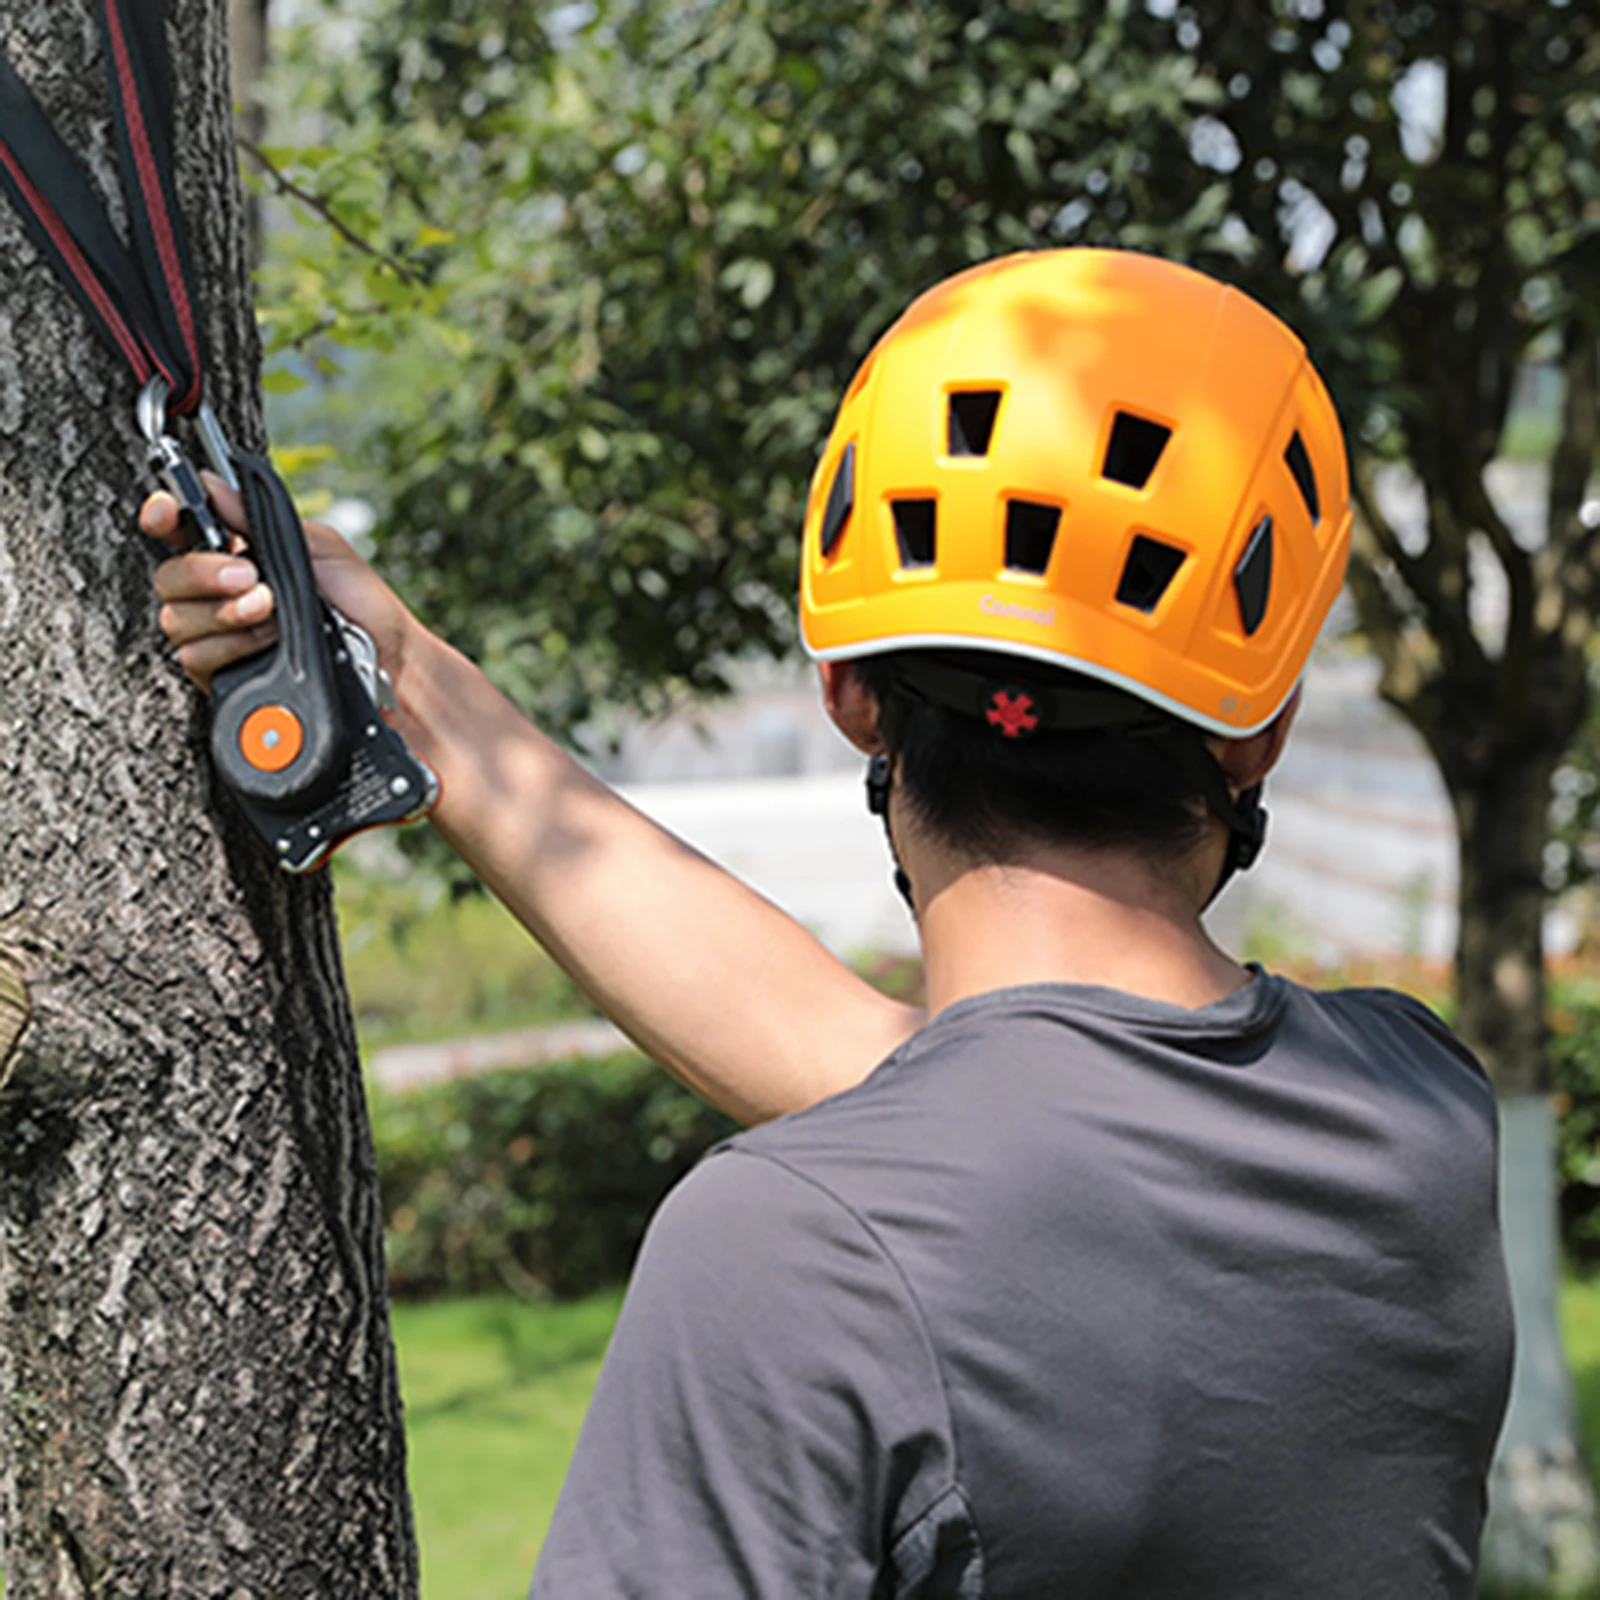 Adjustable Climbing Helmets Safety Hard Hat Head Guard 55-61cm Head Protective Gear Rock Climbing Caving Hiking